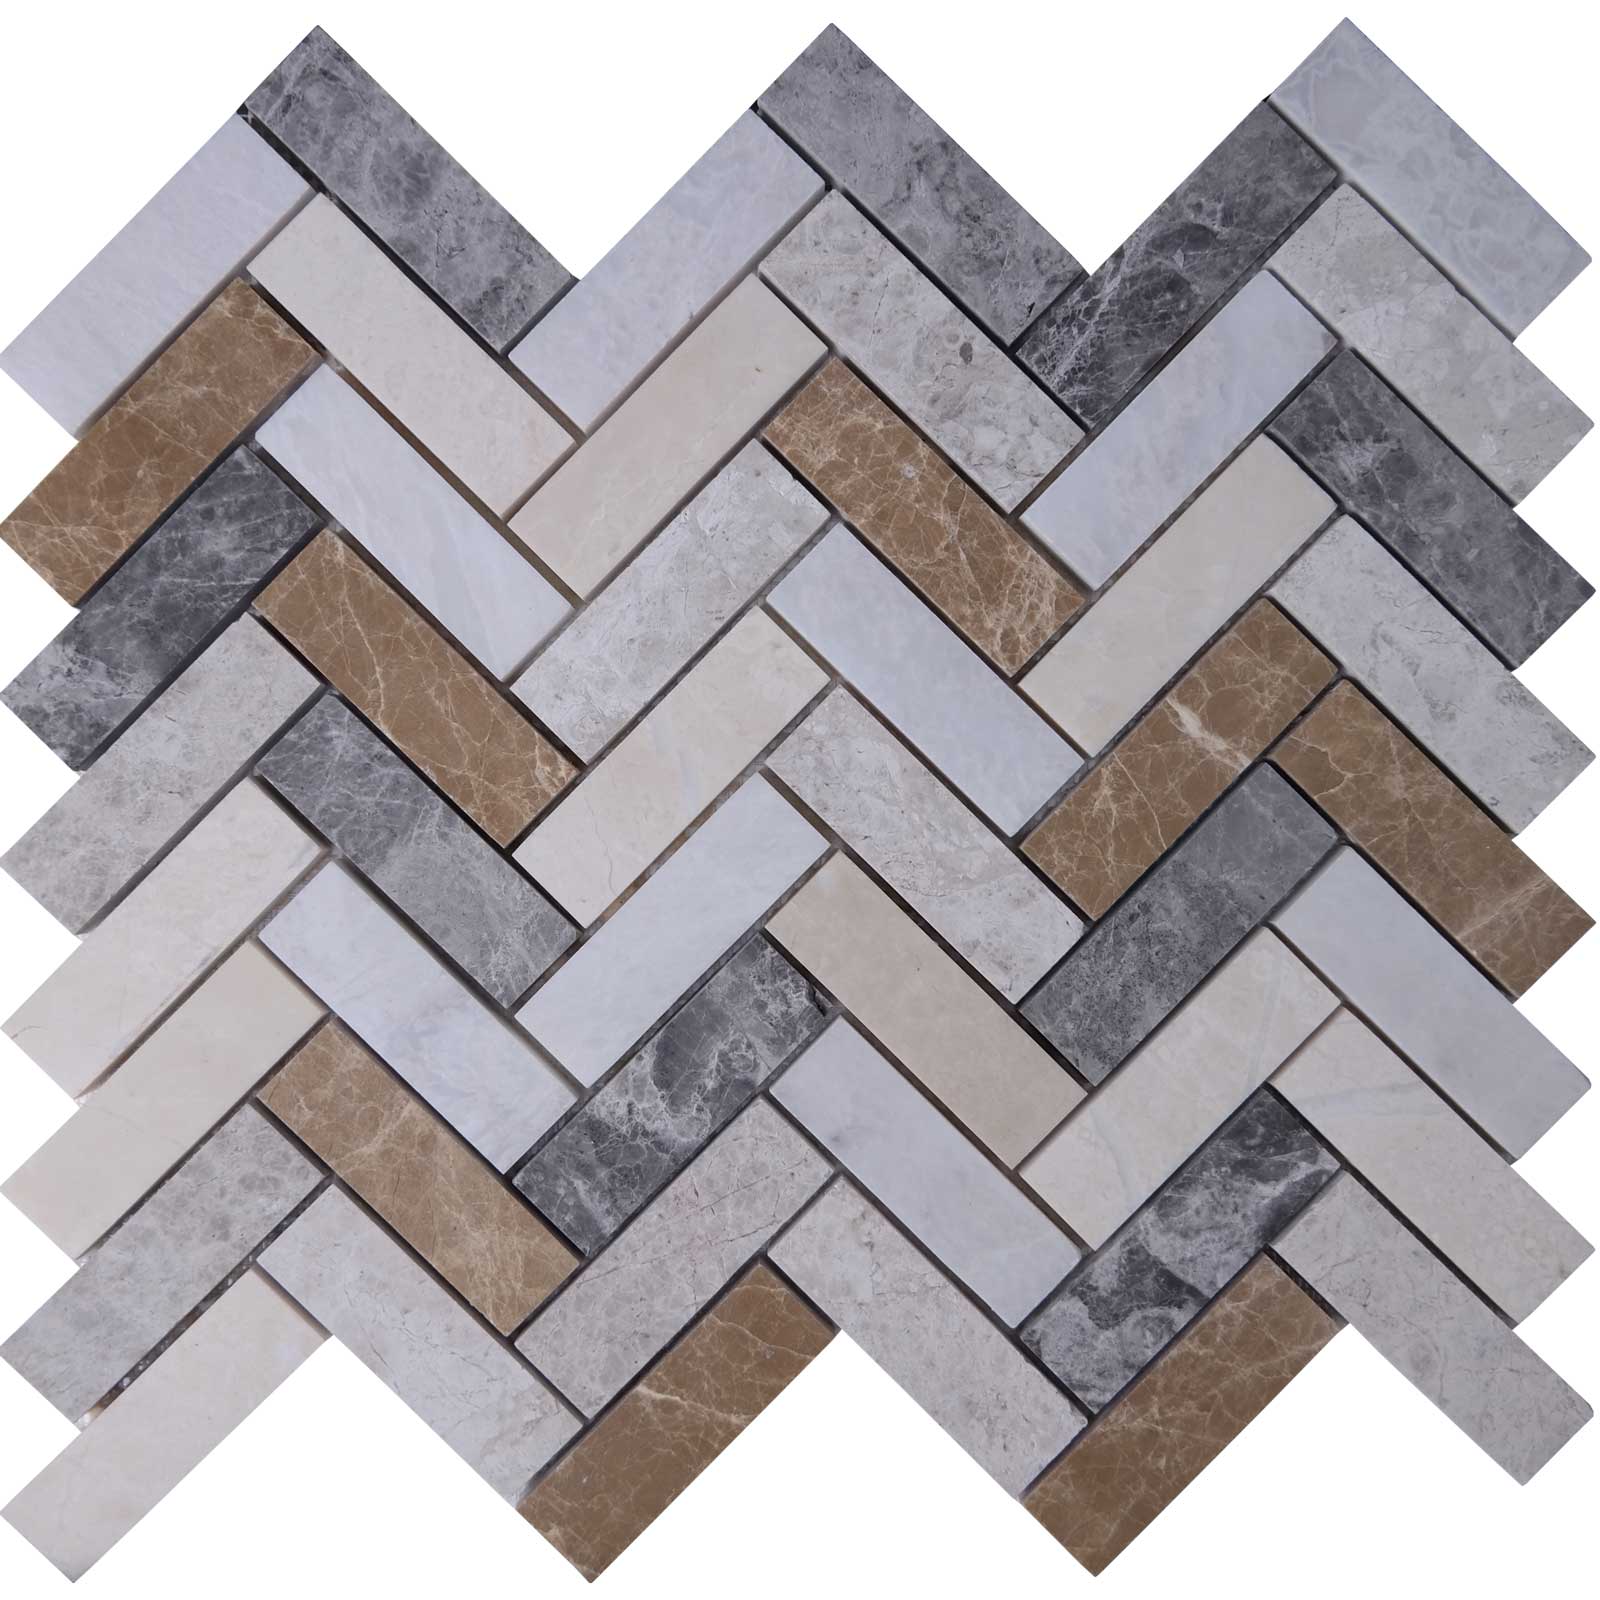  Herringbone  Mixed Marble Mosaic  Tile 